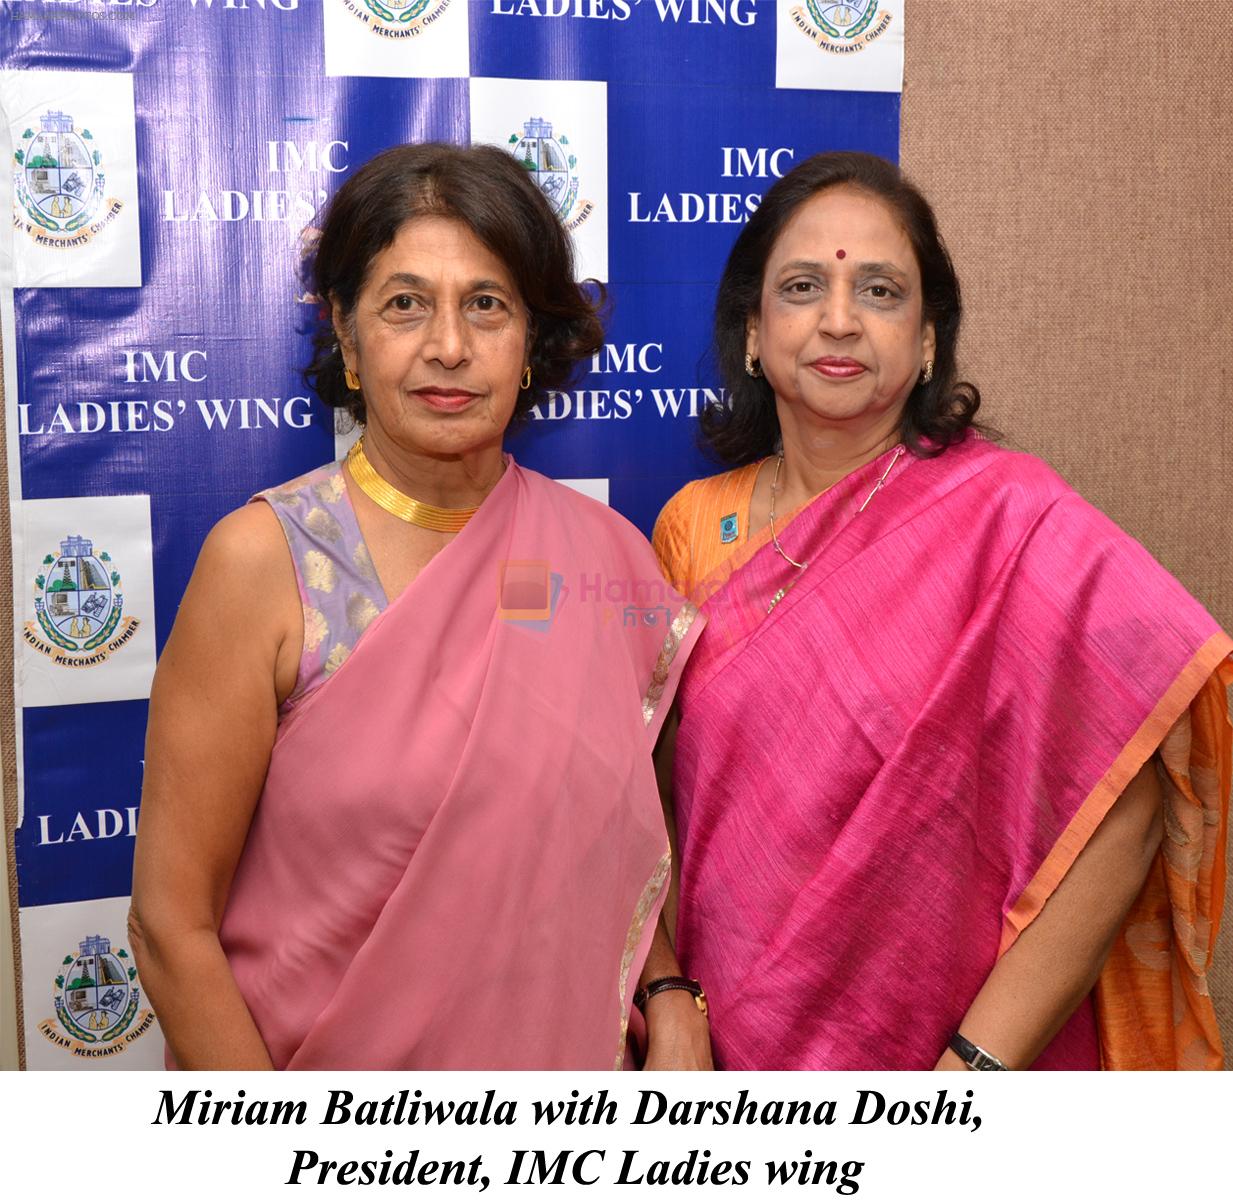 Miriam Batliwala and Darshana Doshi